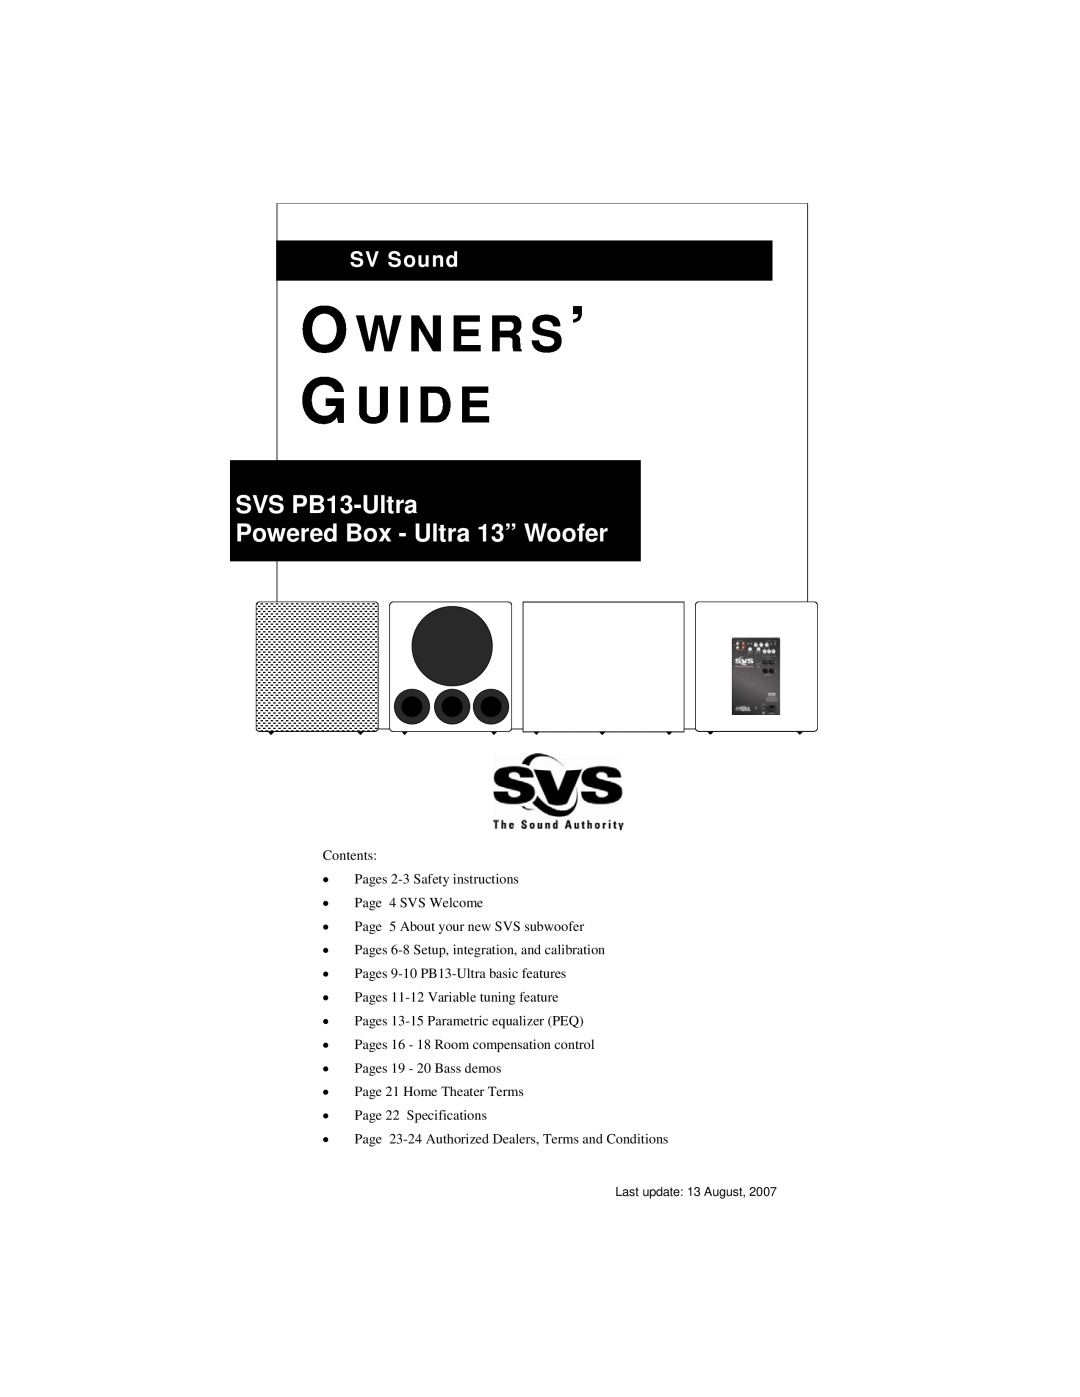 SV Sound specifications O W N E R S ’ G U I D E, SVS PB13-Ultra Powered Box - Ultra 13” Woofer, SV Sound 